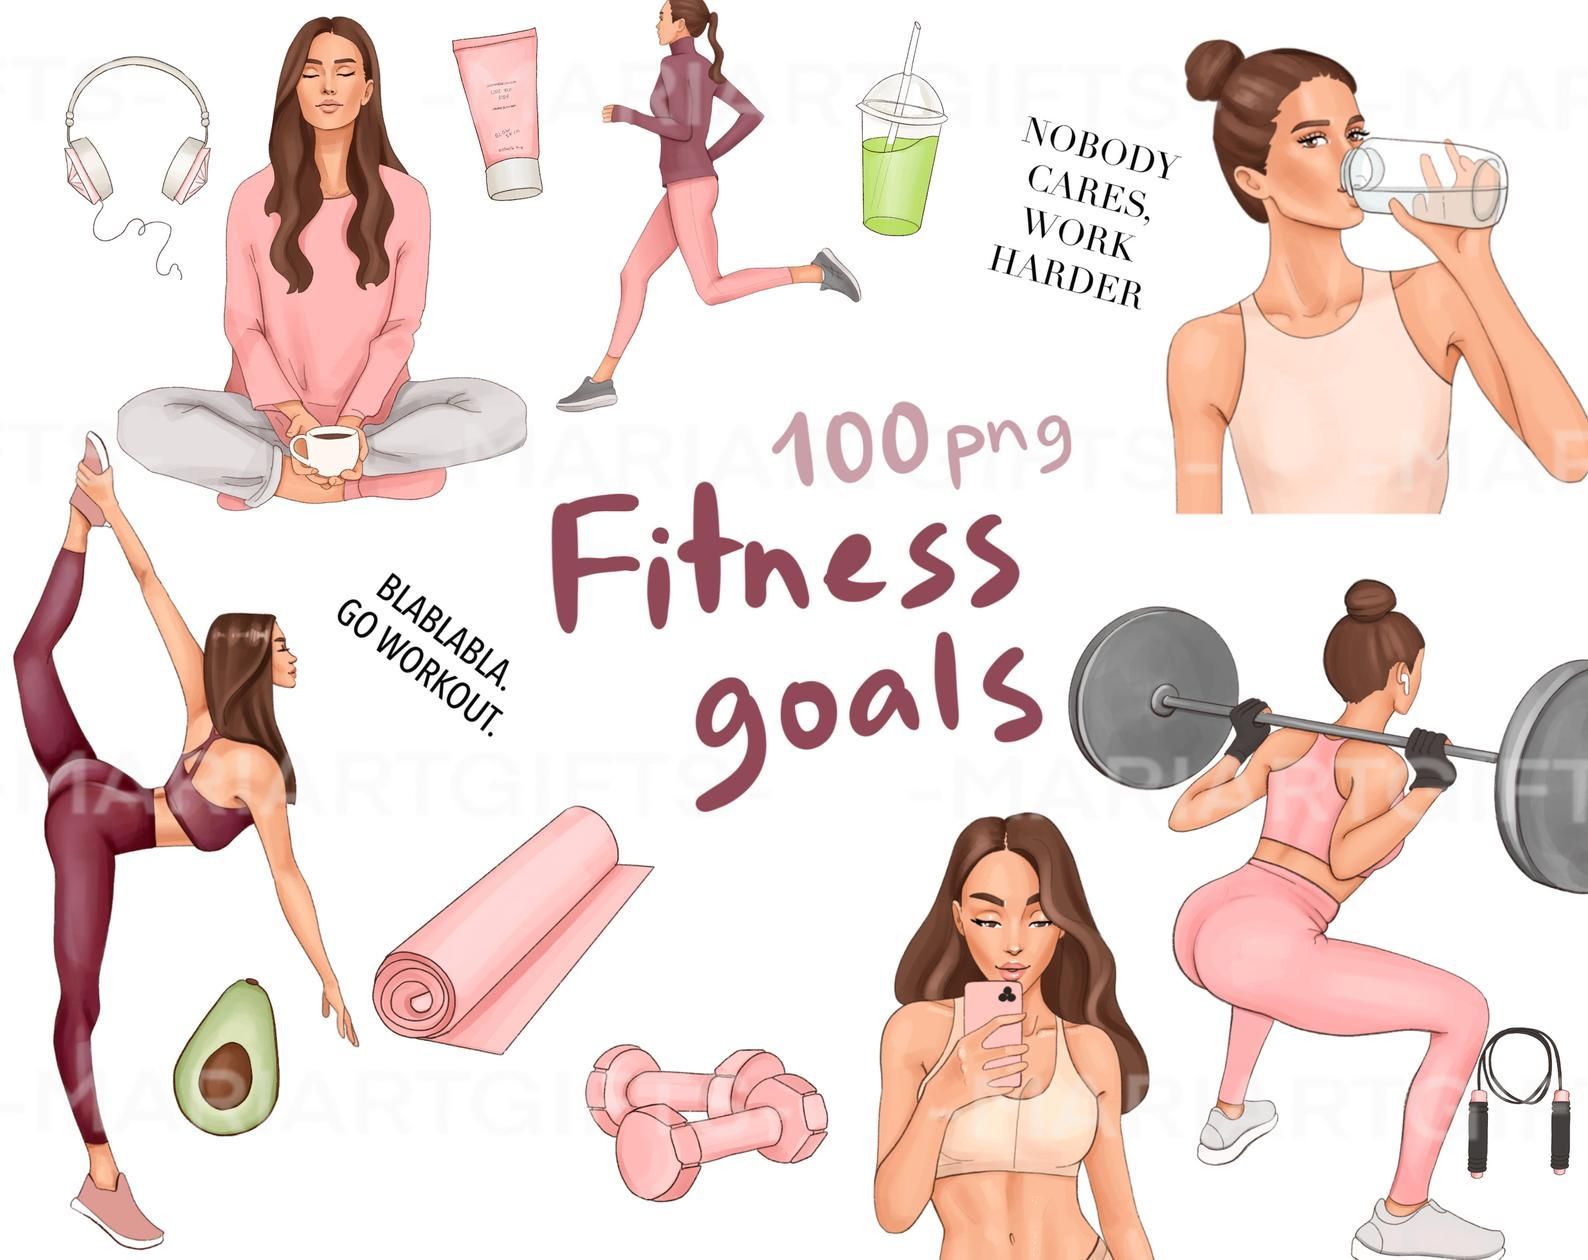 19 fitness Mujer imagenes ideas